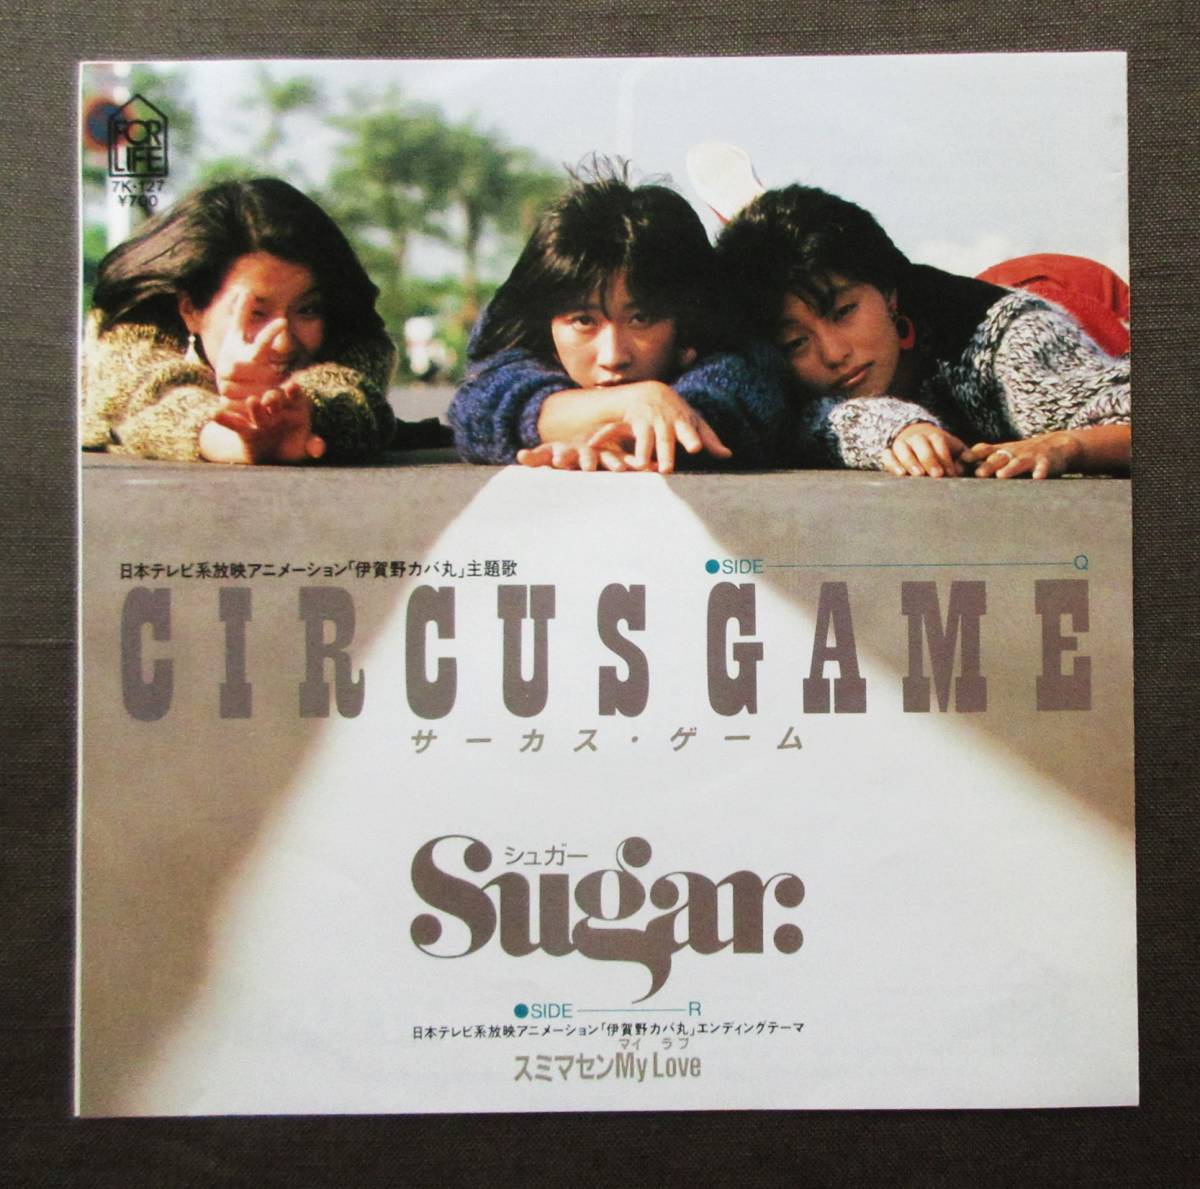 7\'\'EP Iga . hippopotamus circle [ circus * game /smimasenMy Love]shuga-Sugar./1983 year /FOR LIFE/7K-127